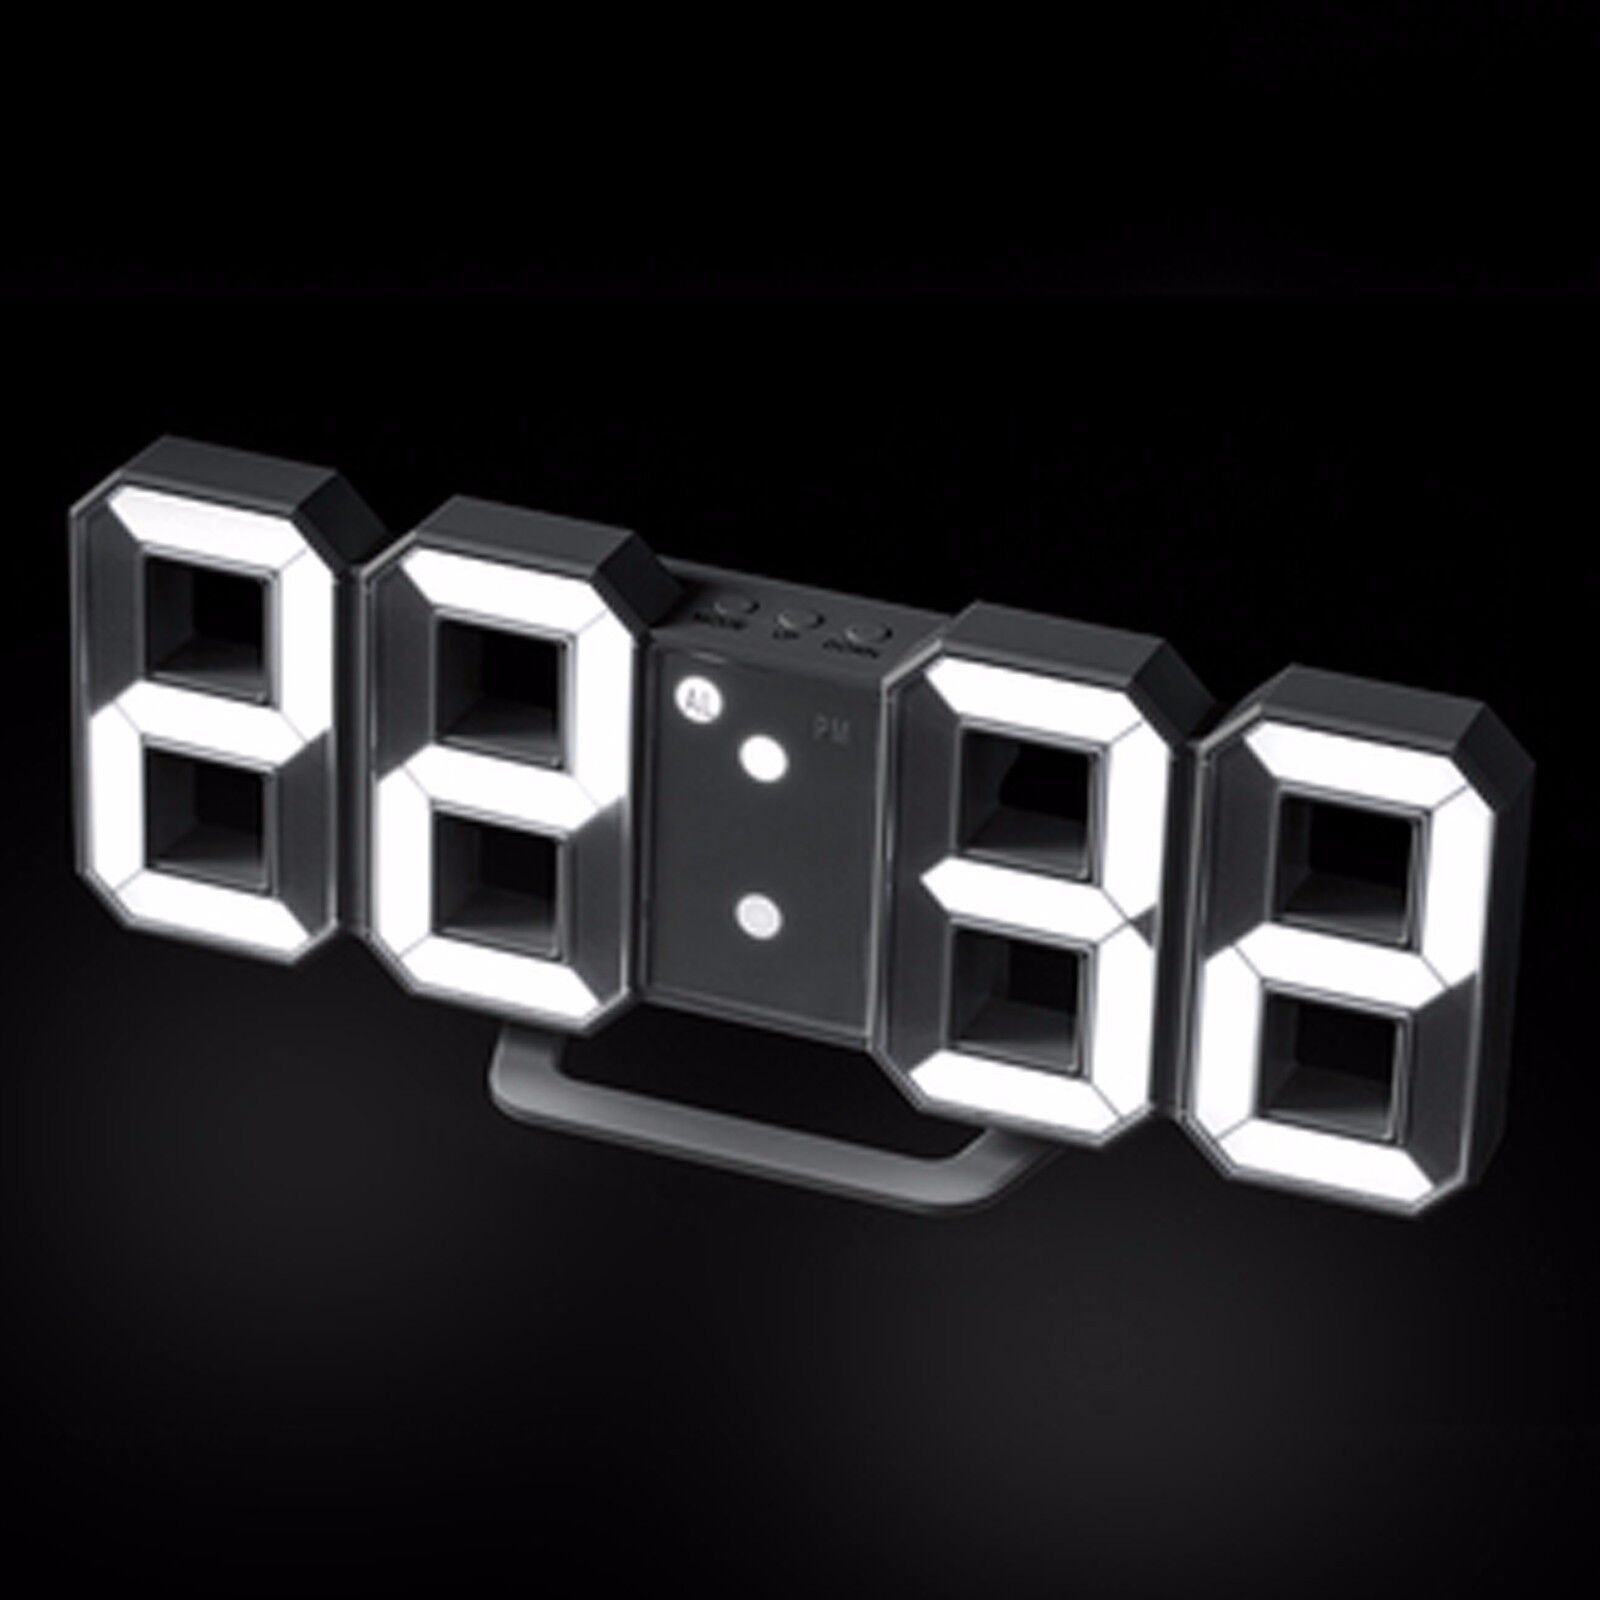 Гаджет число. 3d часы Mirron 100.11-з. Заставка часы цифровые. Скринсейвер электронные часы. Электронные часы на черном фоне.